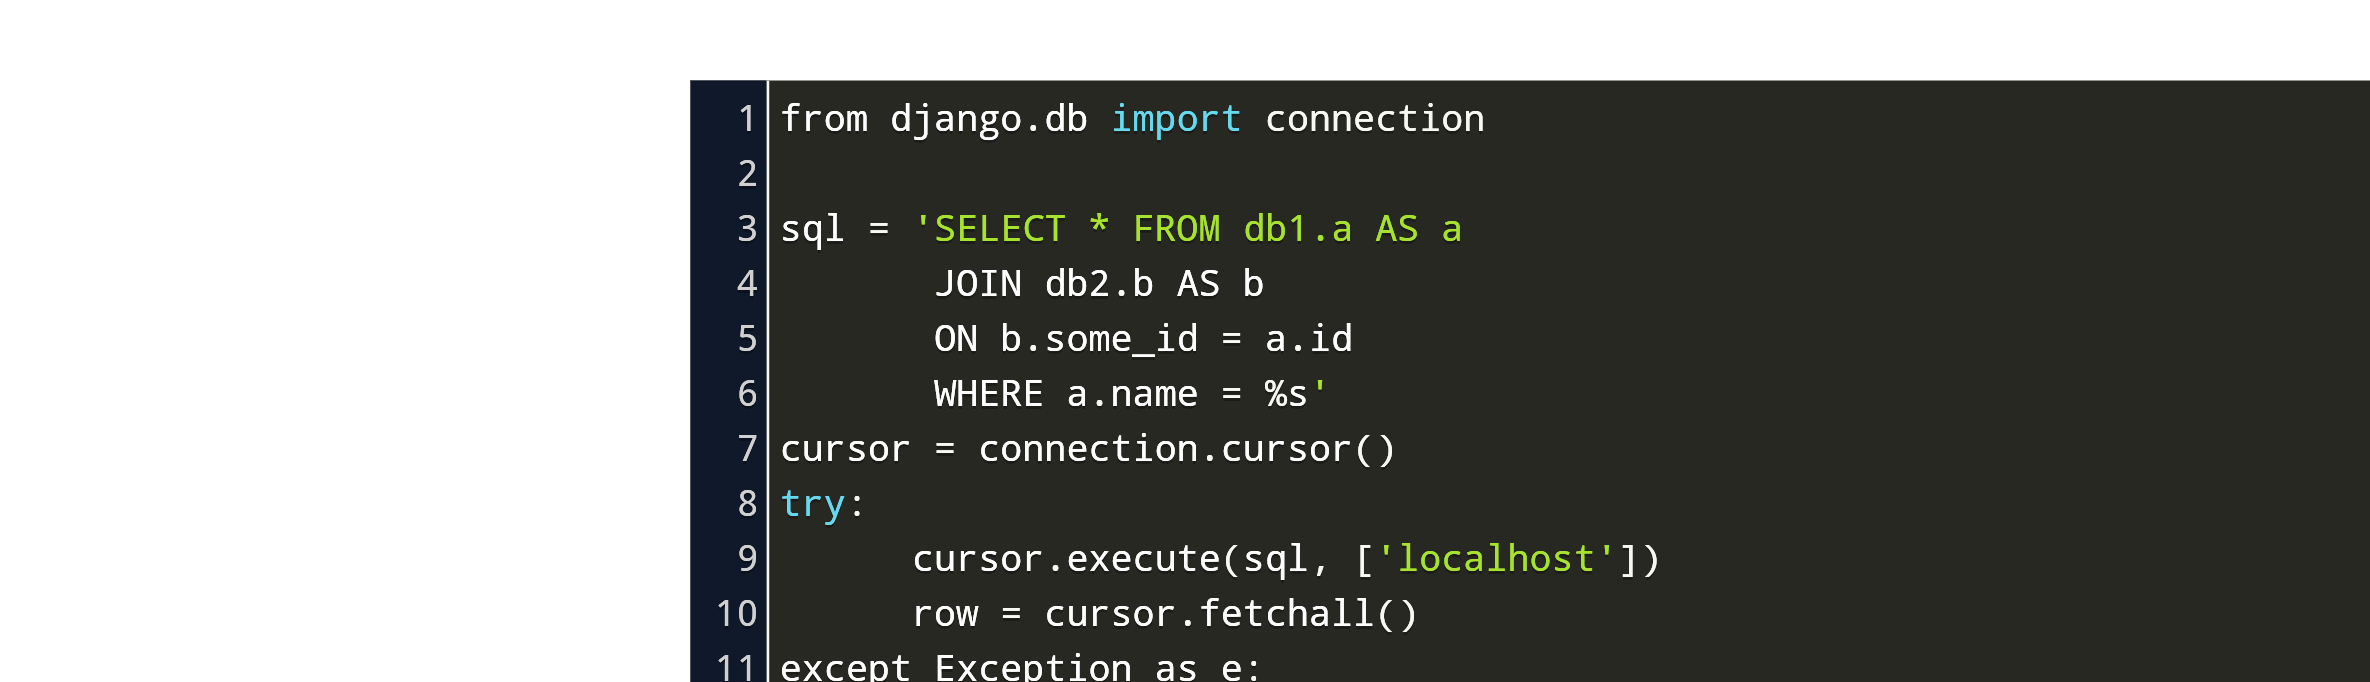 django connection cursor Code Example